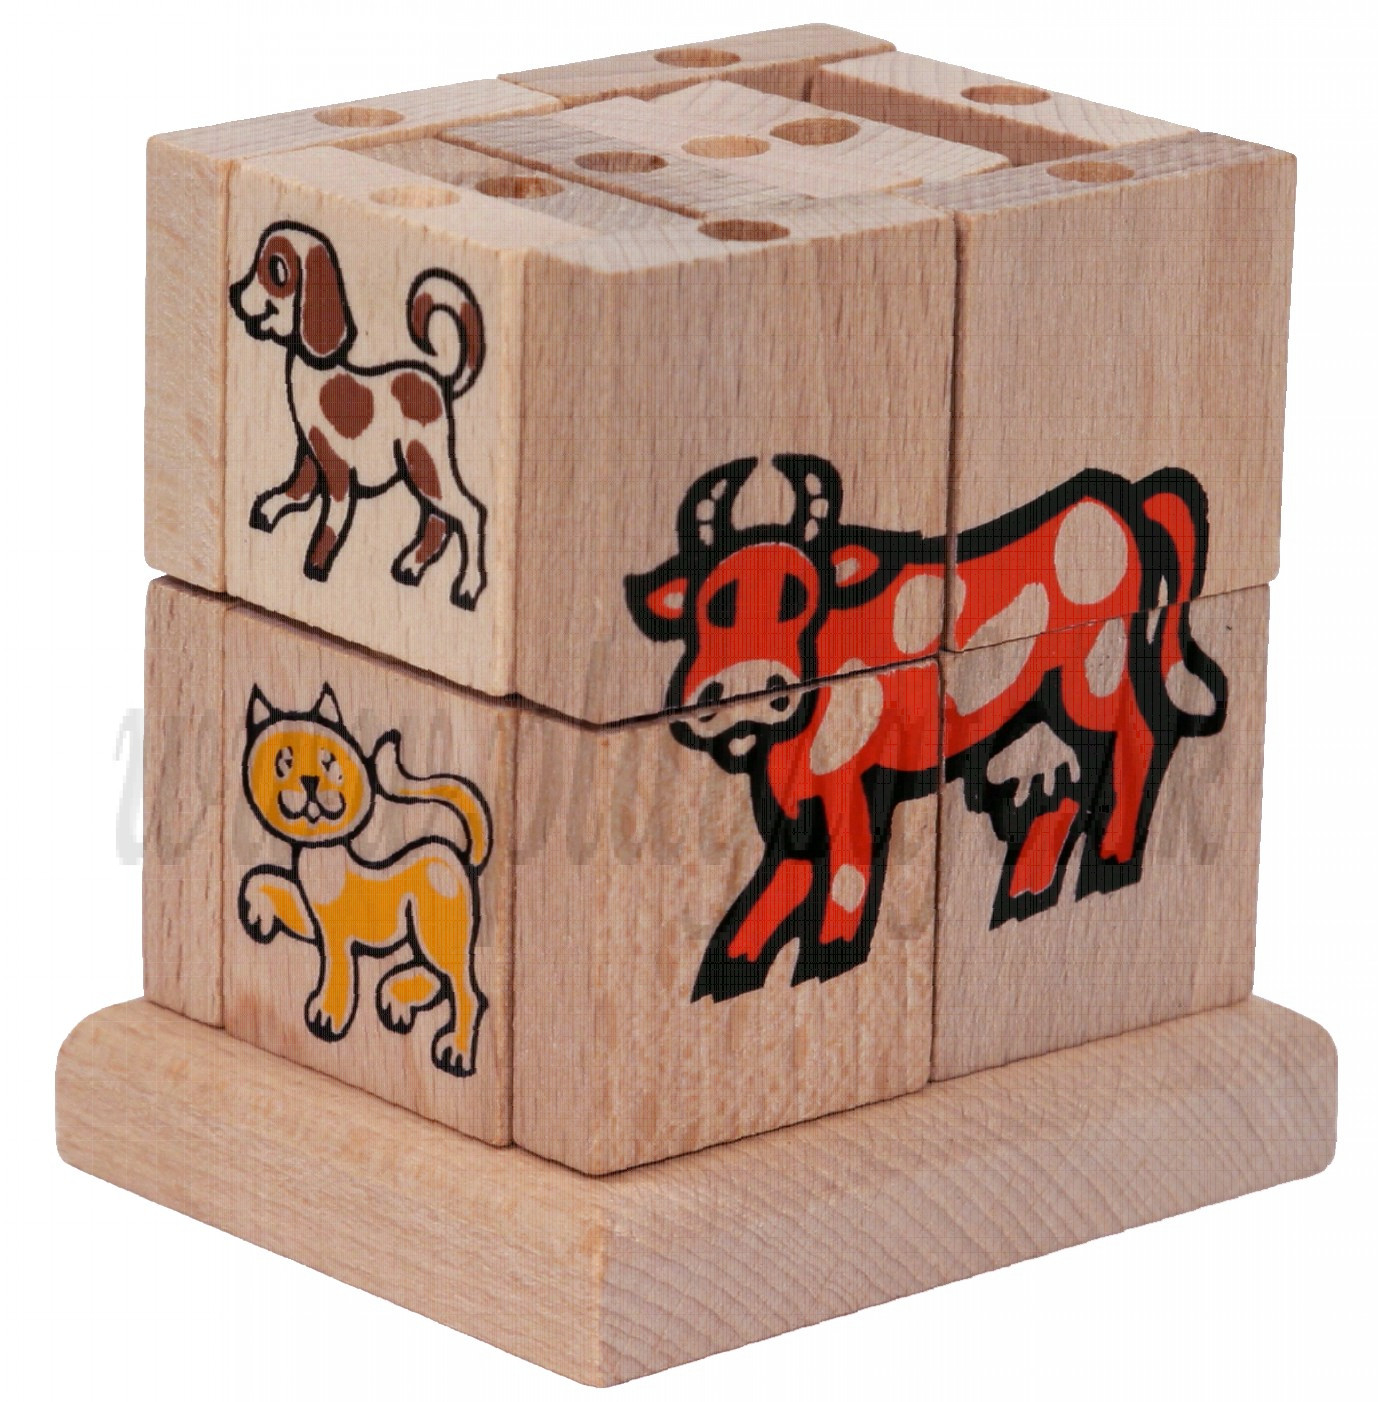 MIK Wooden Assembling Cube Farm Animals, 20 pieces